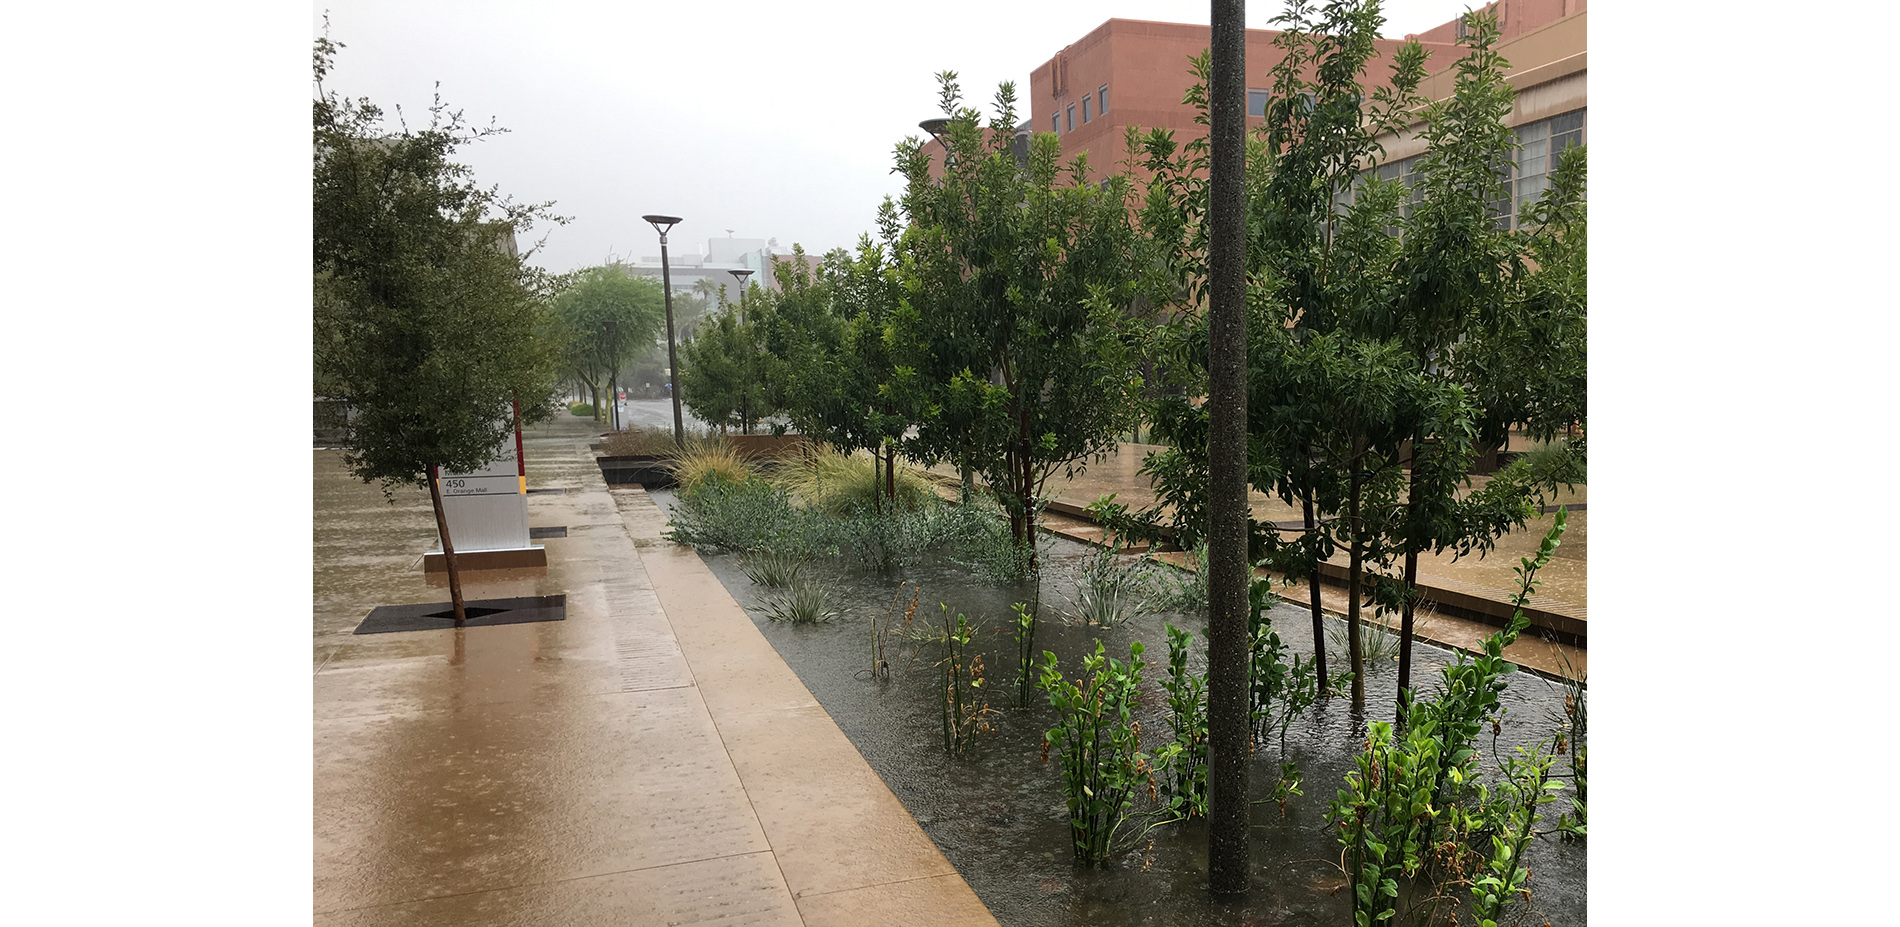 Rare Rain Event on Orange Mall